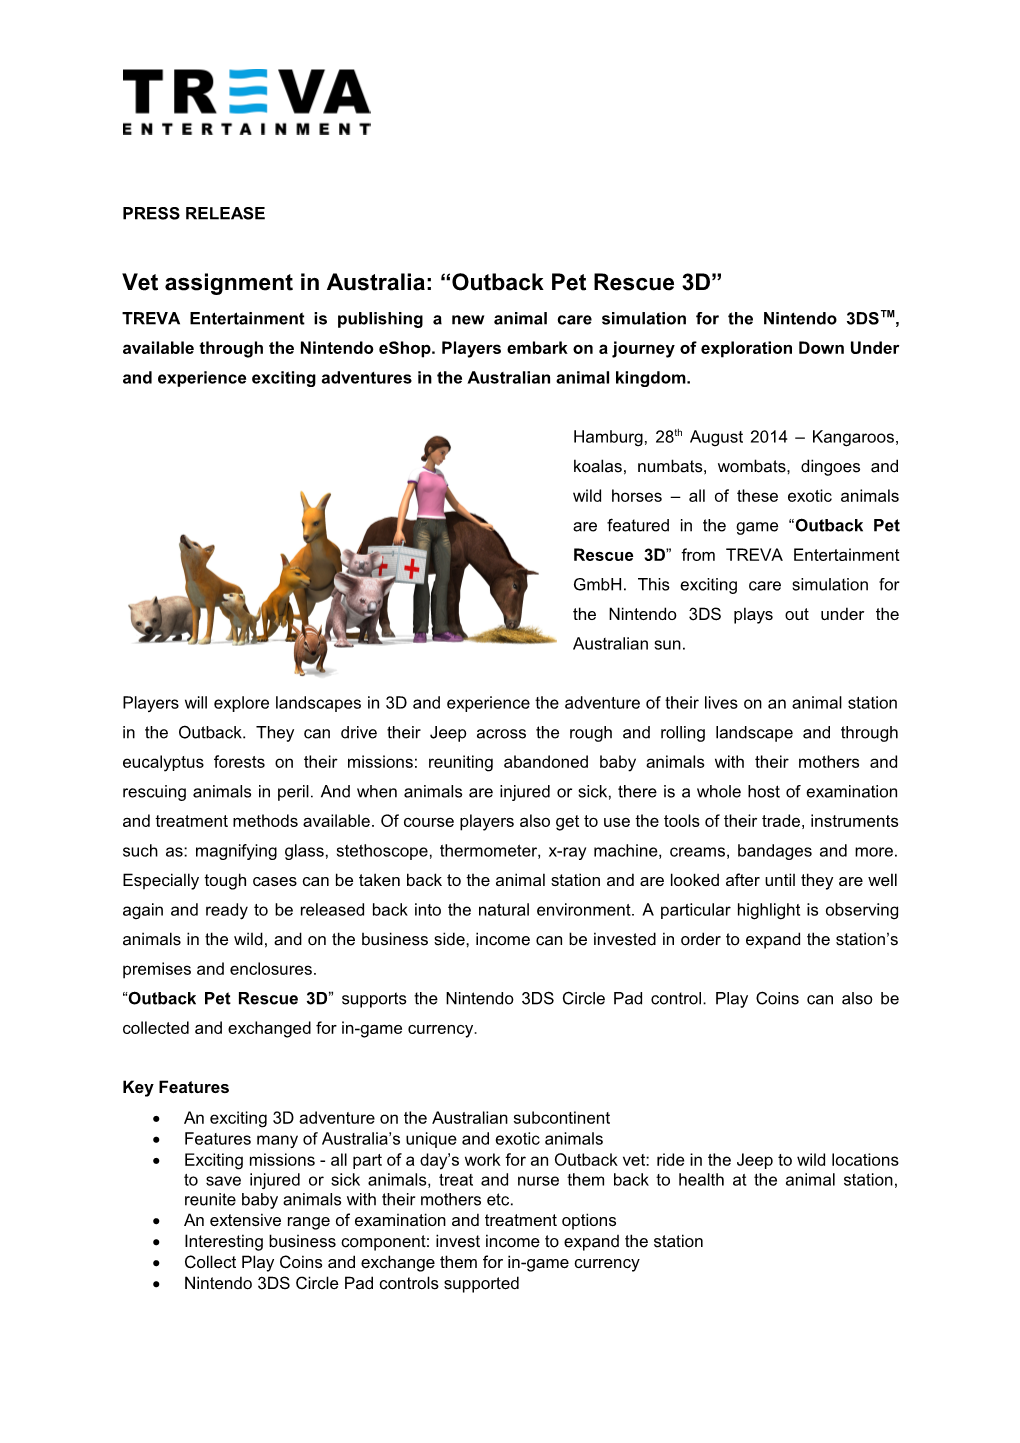 Vet Assignment in Australia: Outback Pet Rescue 3D